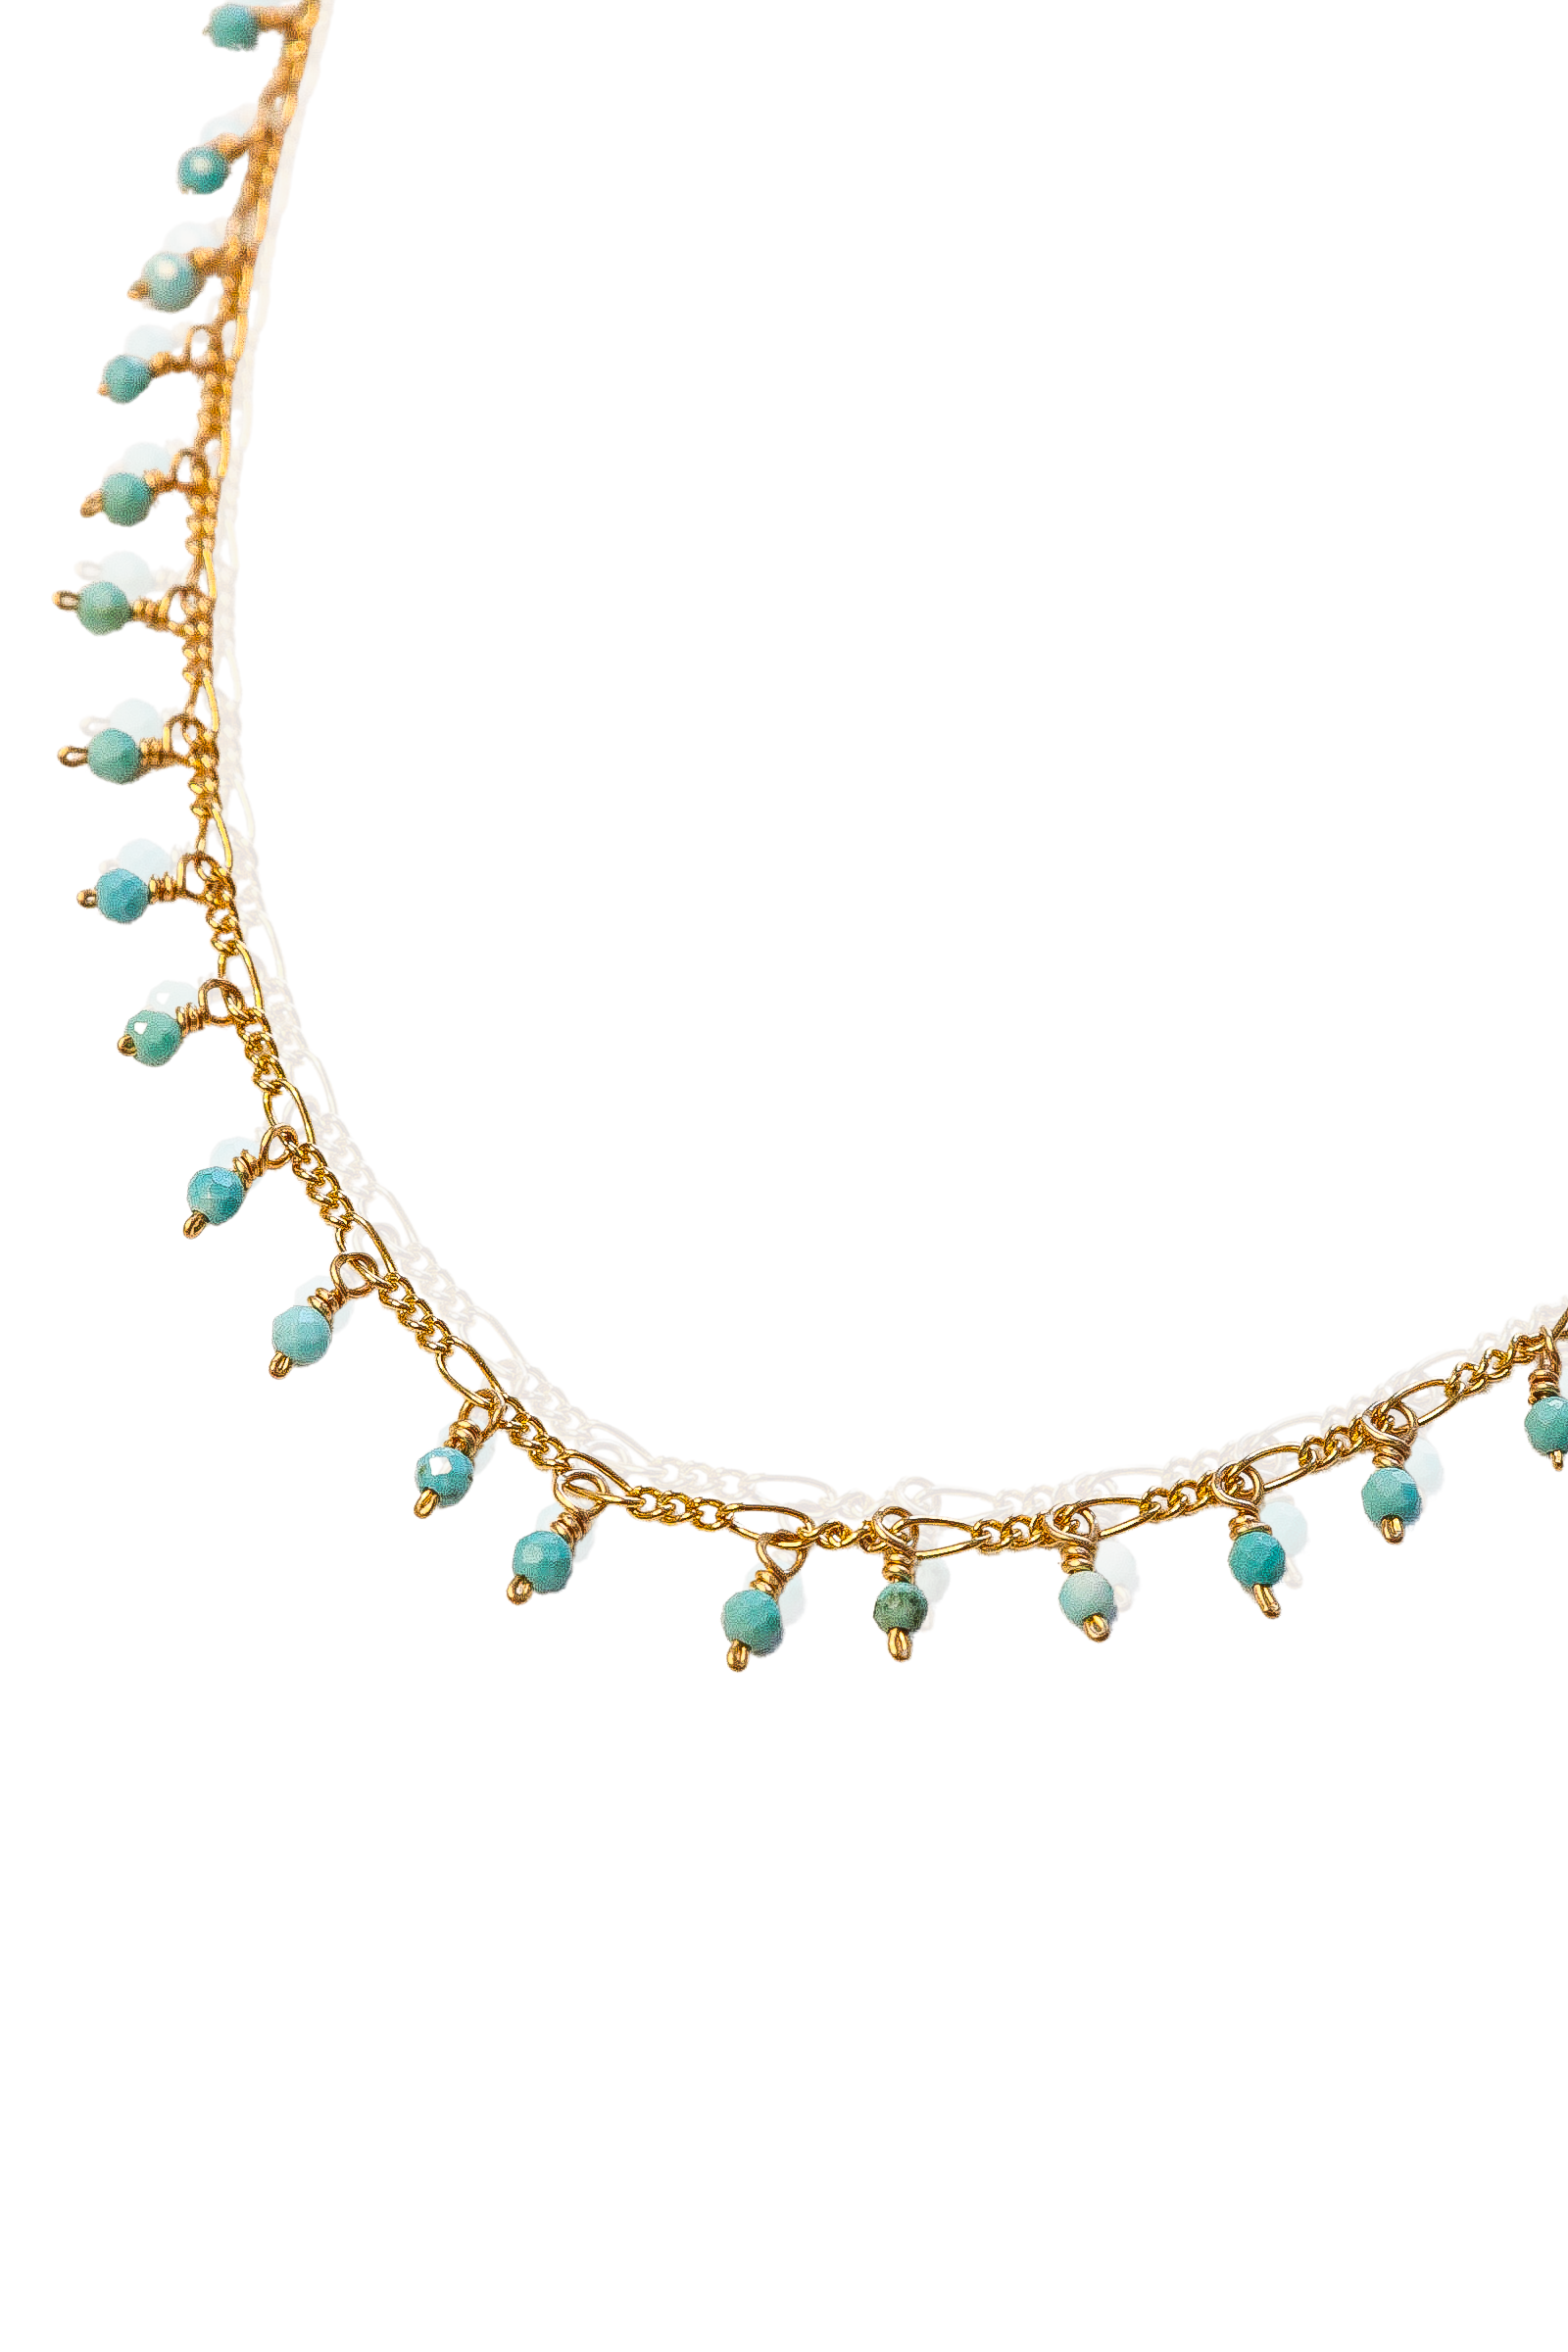 ADITA GOLD 14K Gold Turquoise Necklace - 14K Solid Yellow Gold India | Ubuy